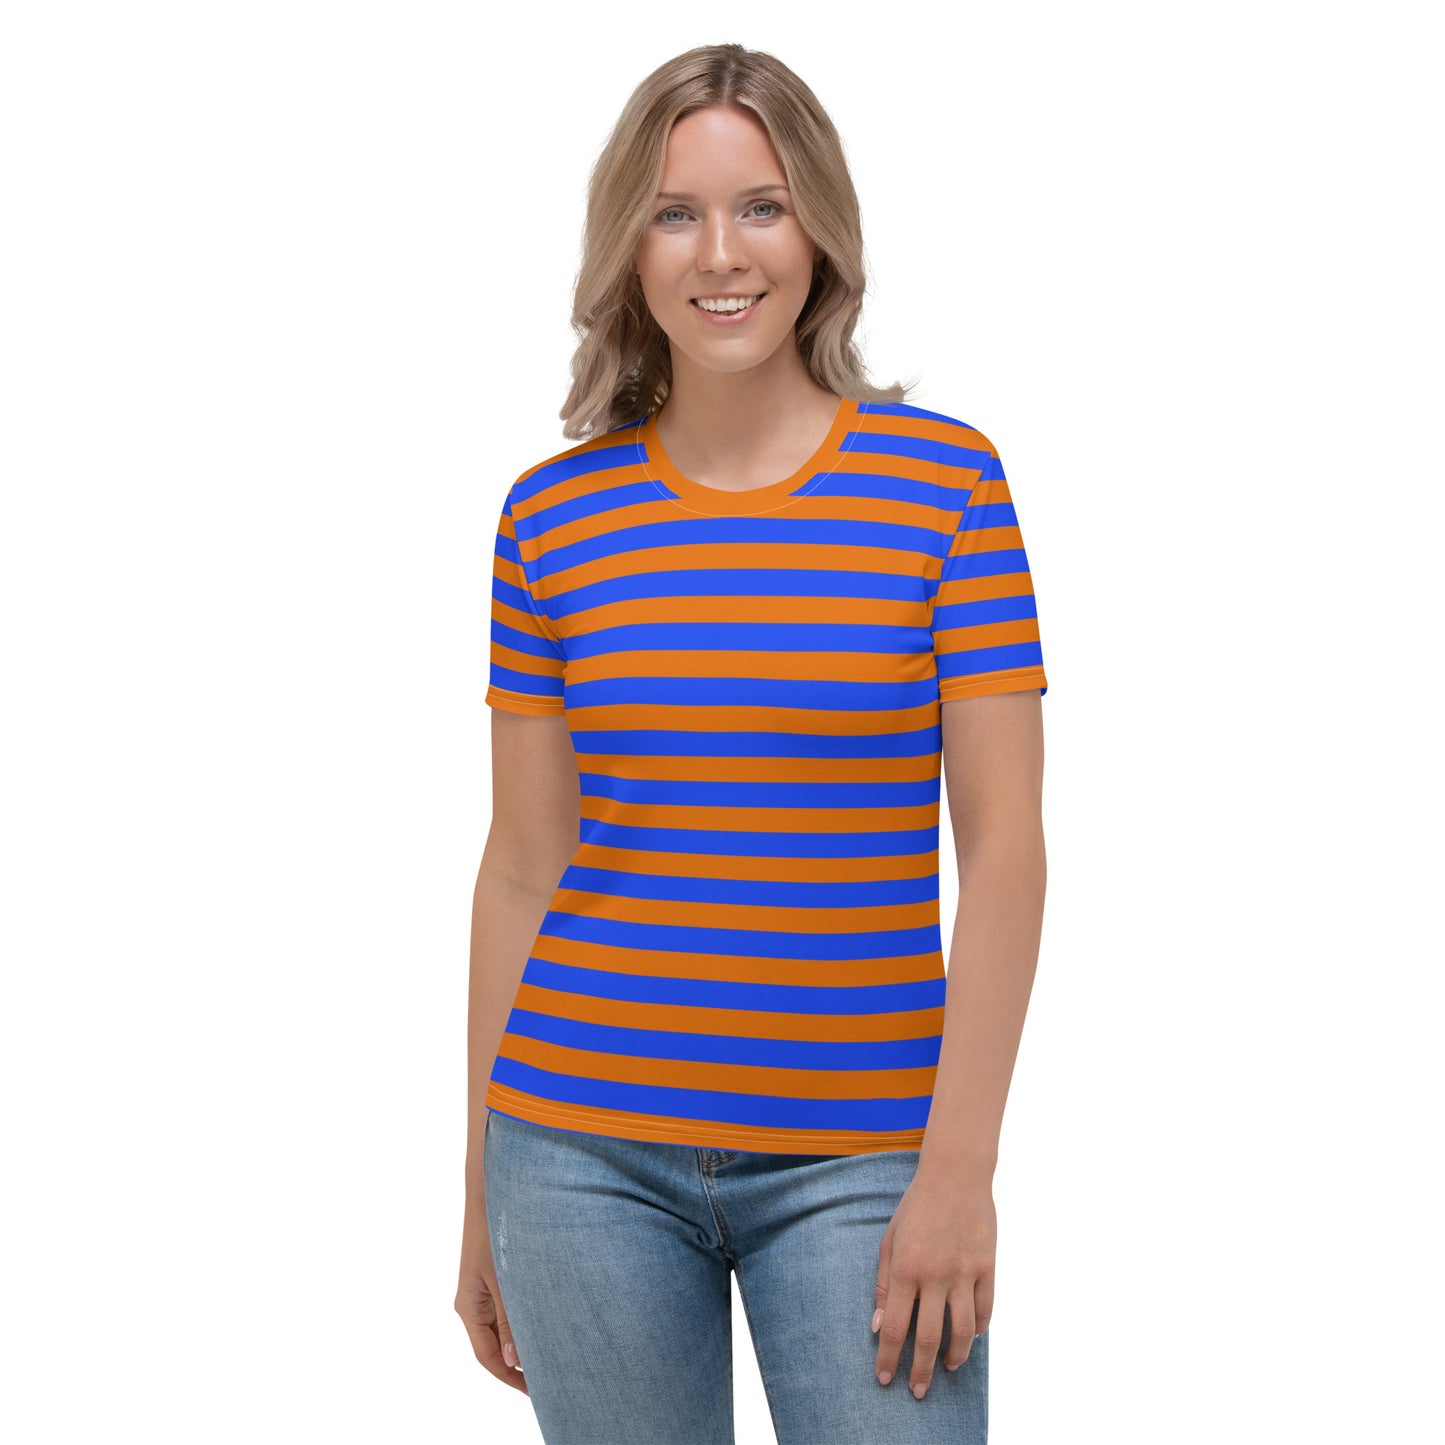 Dynamic Duo: Blue & Orange Striped Shirt